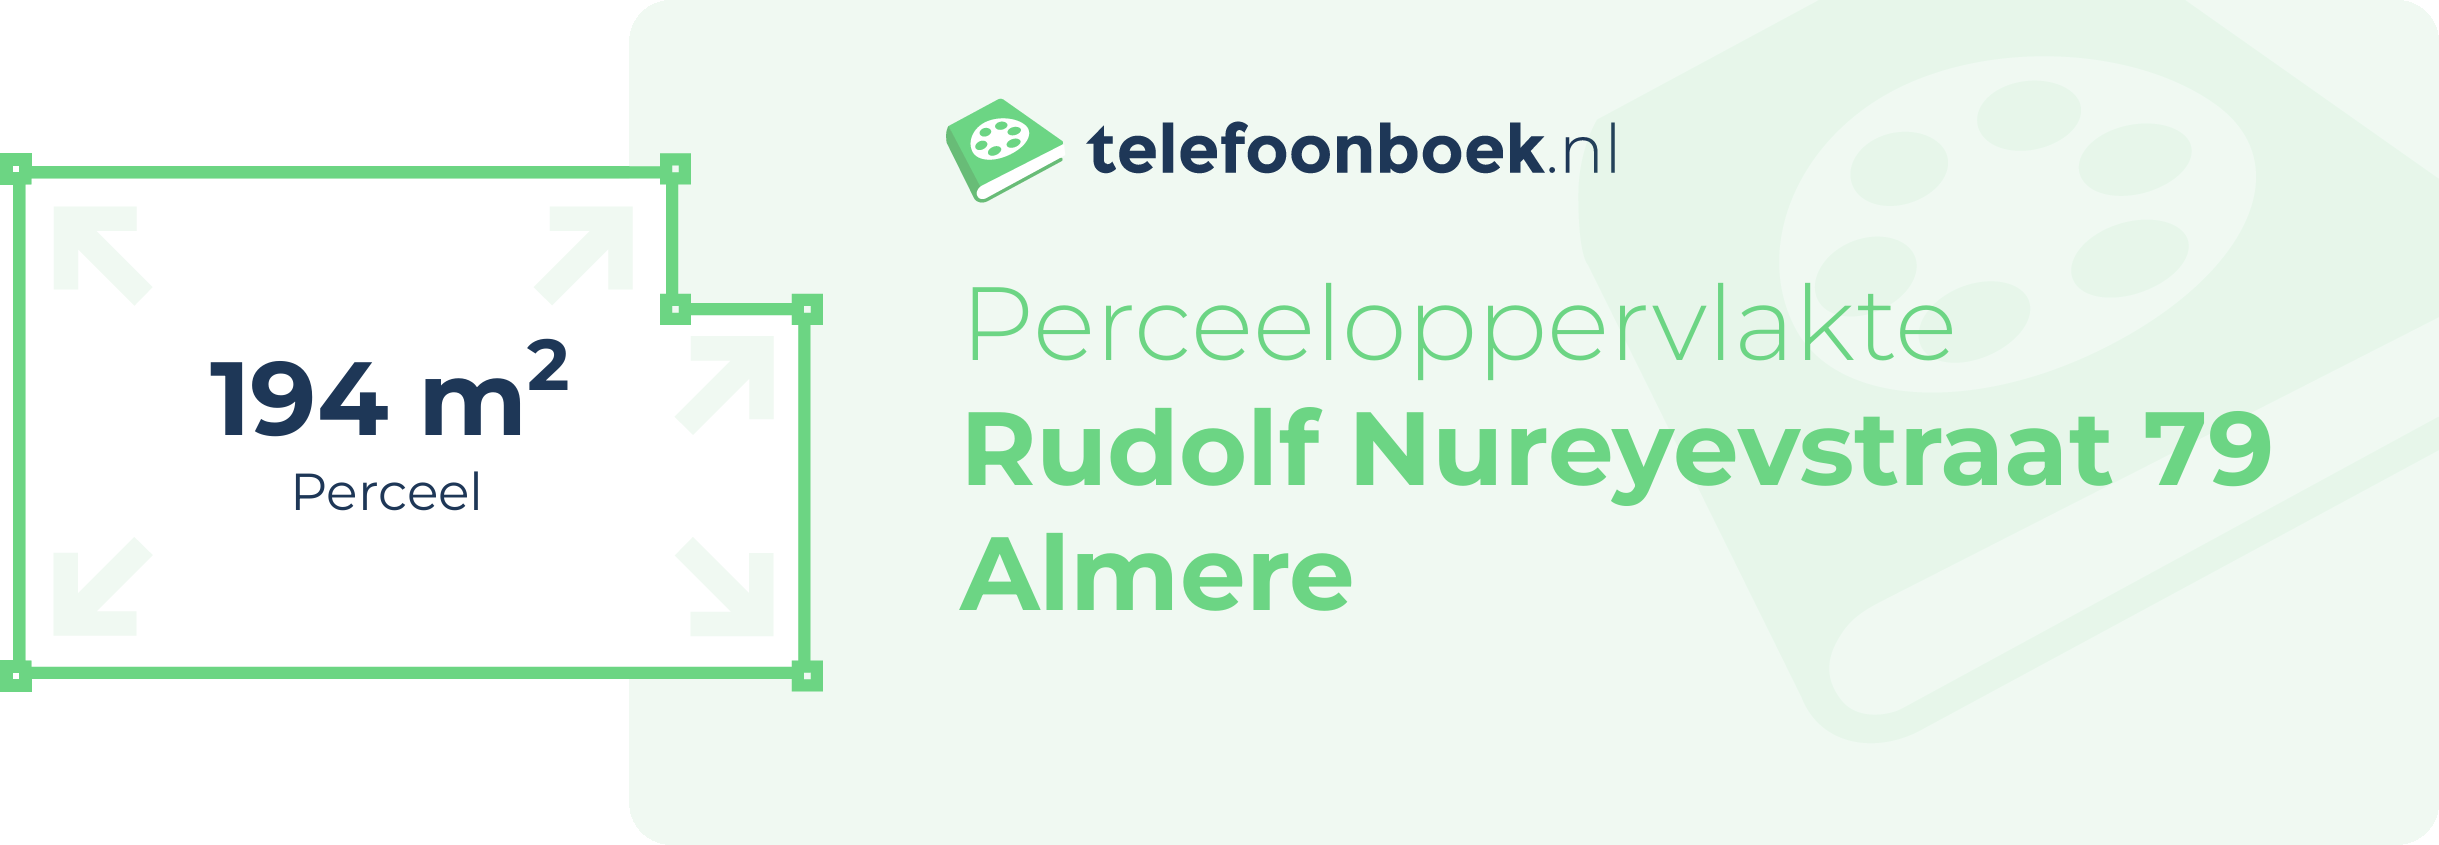 Perceeloppervlakte Rudolf Nureyevstraat 79 Almere